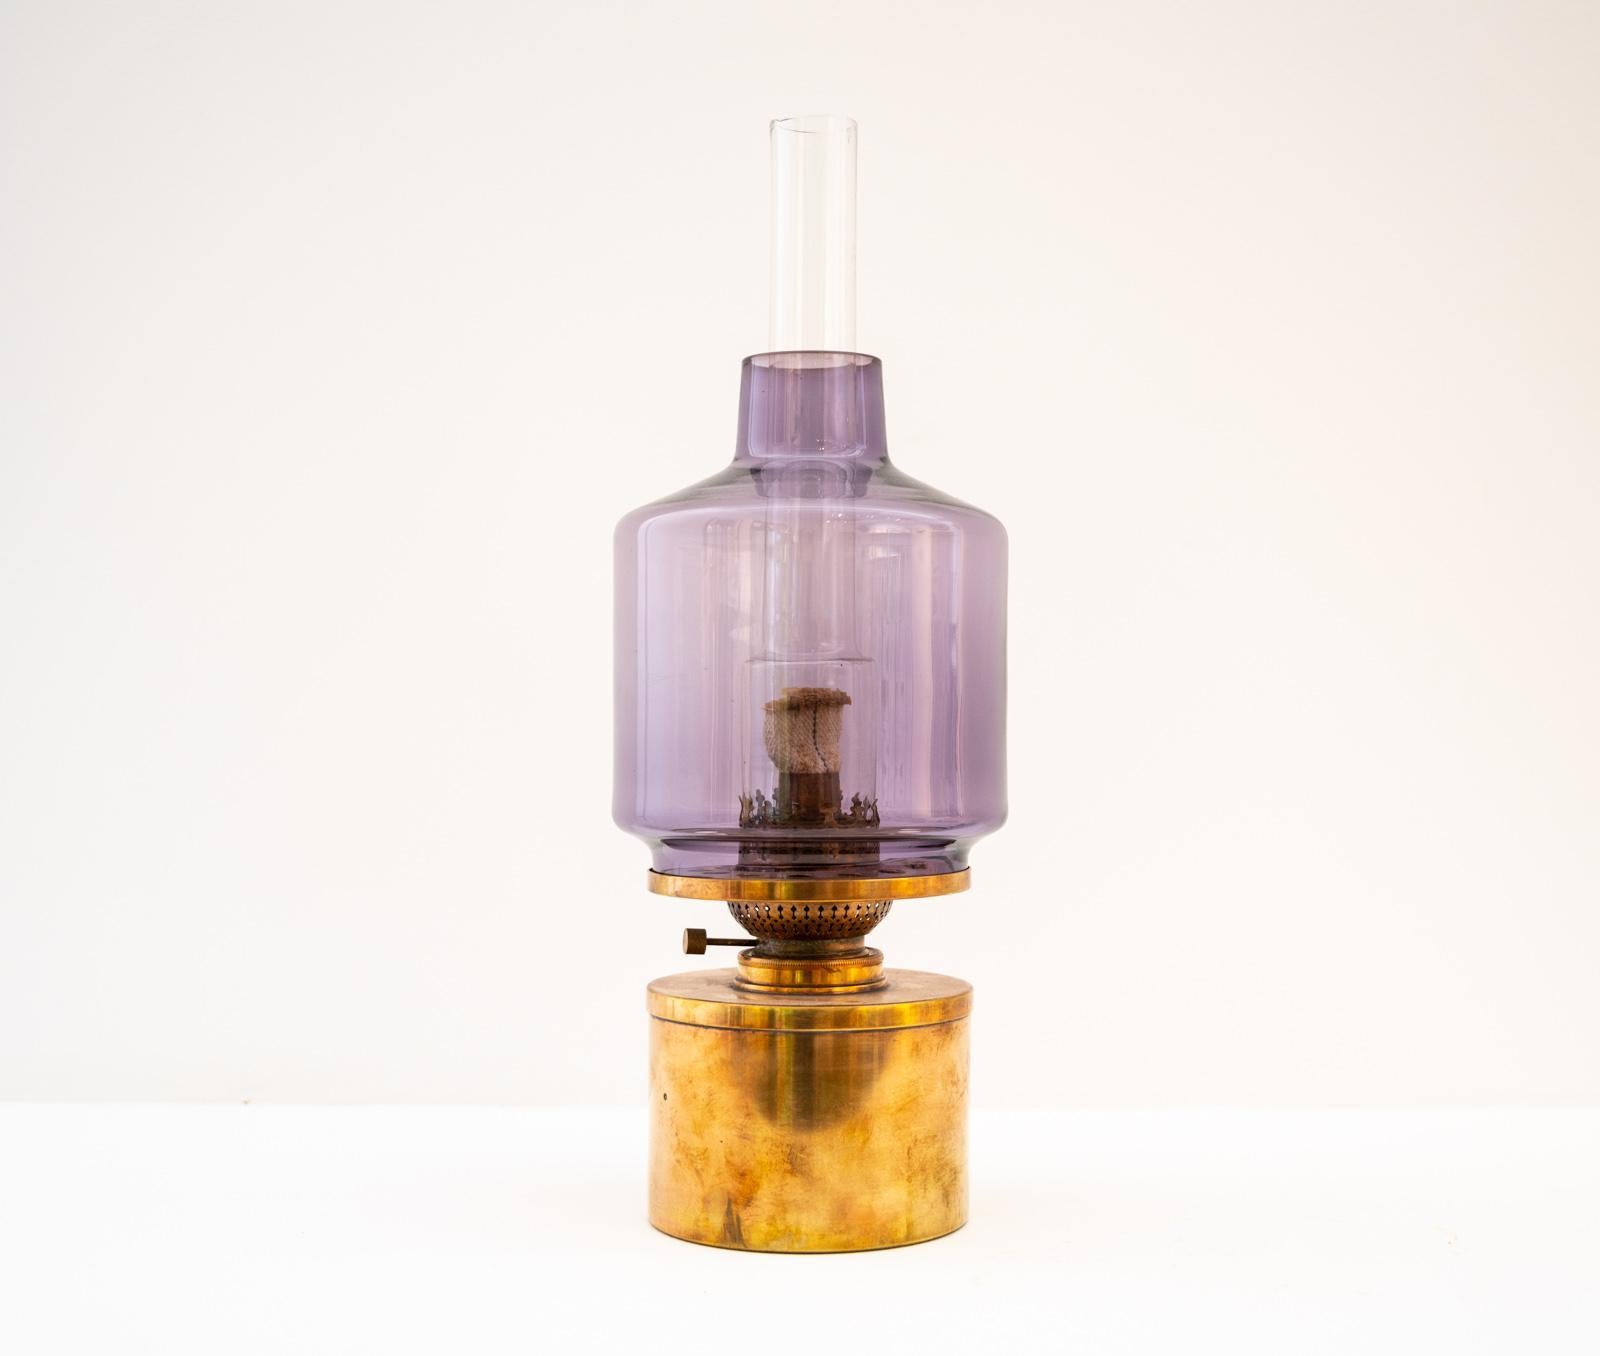 A kerosene/oil lamp model L-47 designed by Hans-Agne Jakobsson and produced by Hans-Agne Jakobsson in Markaryd, Sweden.